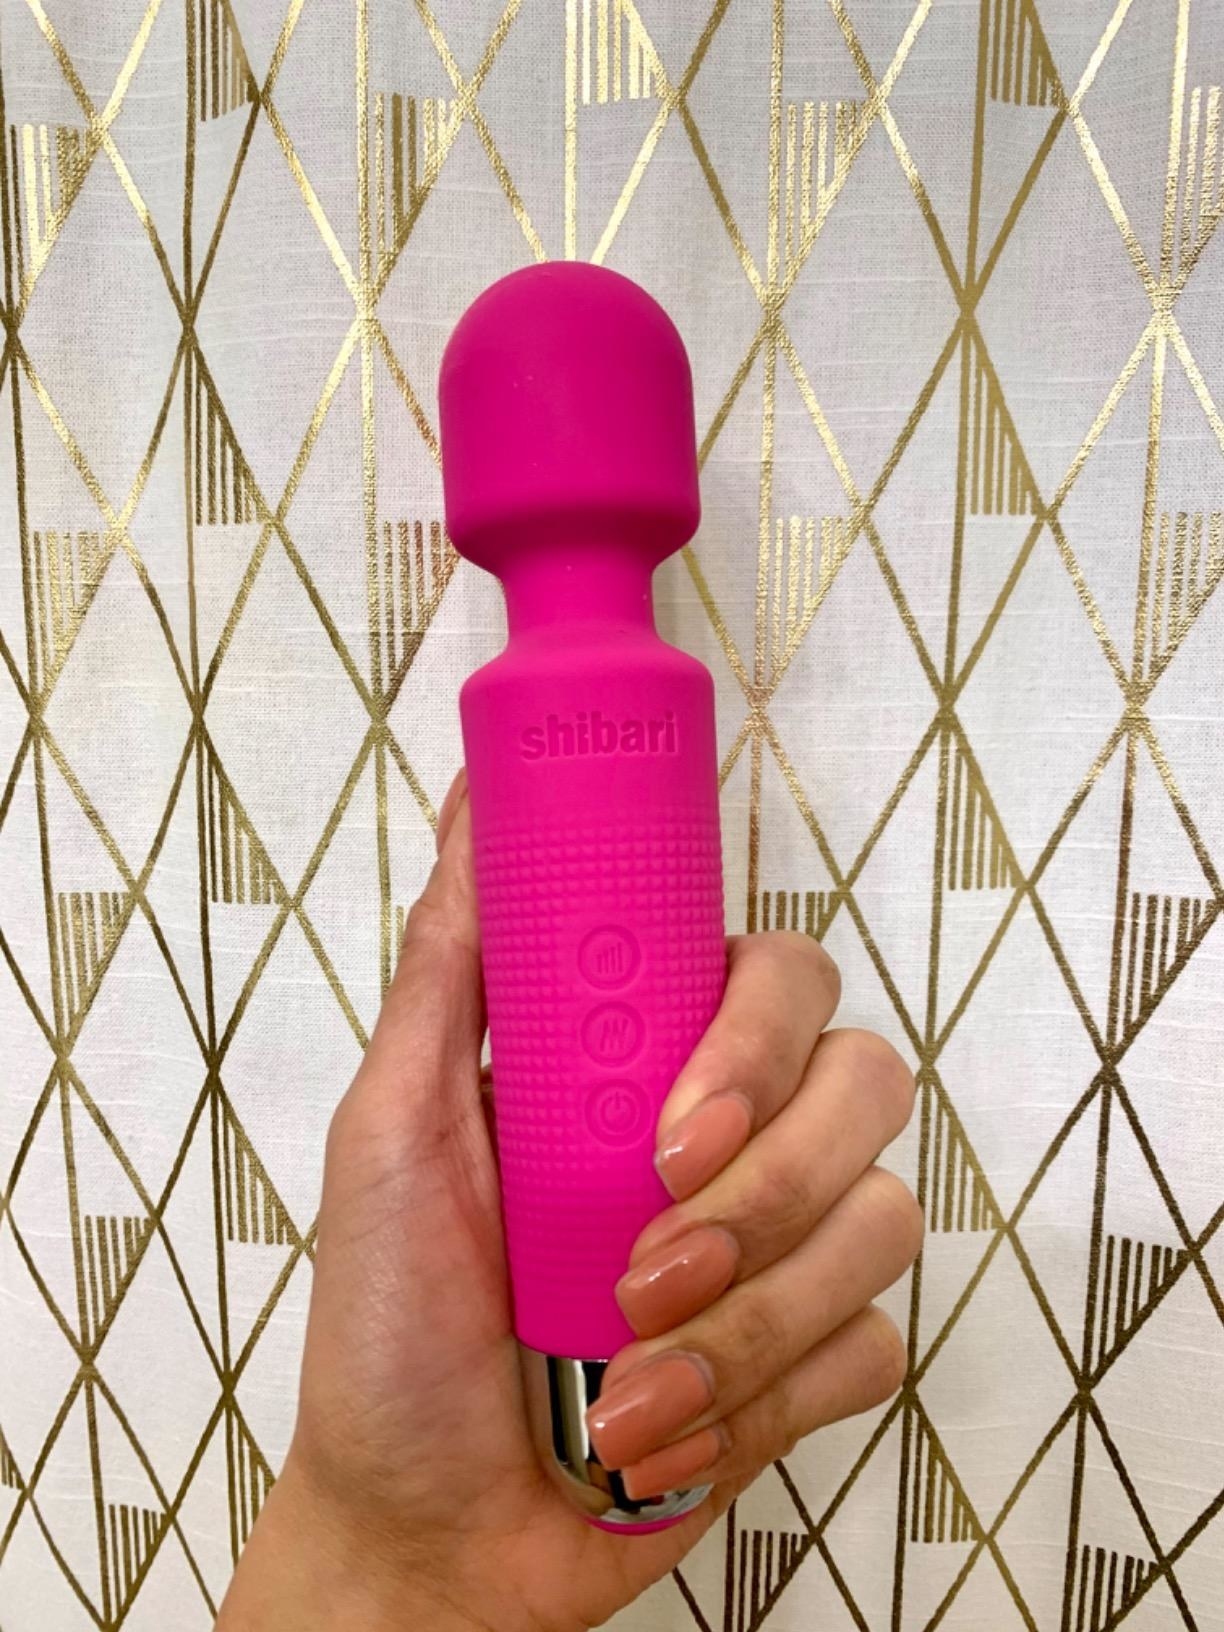 Model holding pink vibrating wand